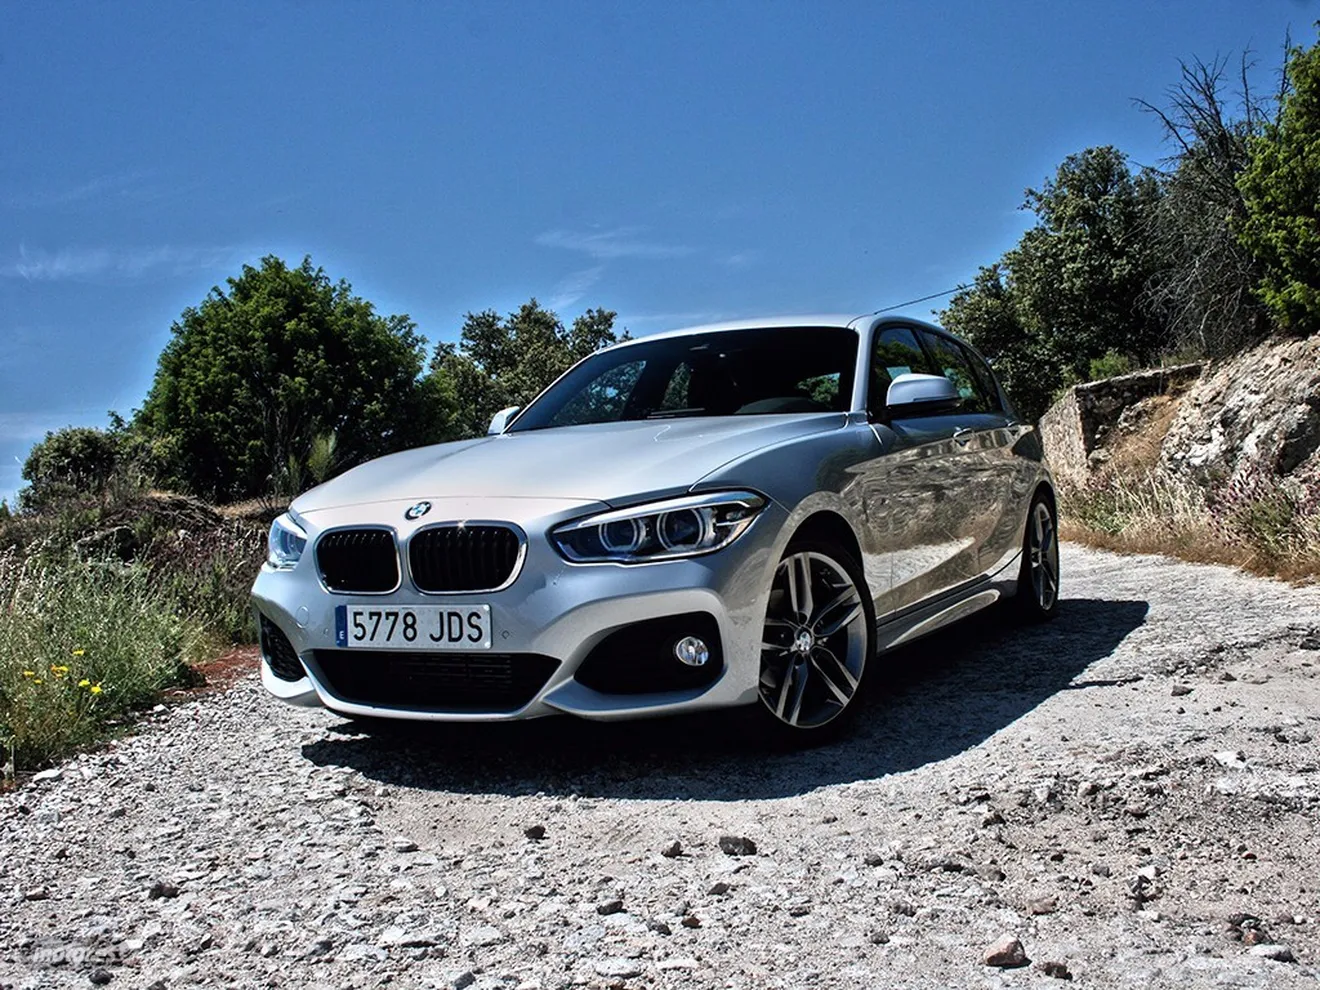 BMW Serie 1, un compacto premium por 150 euros al mes